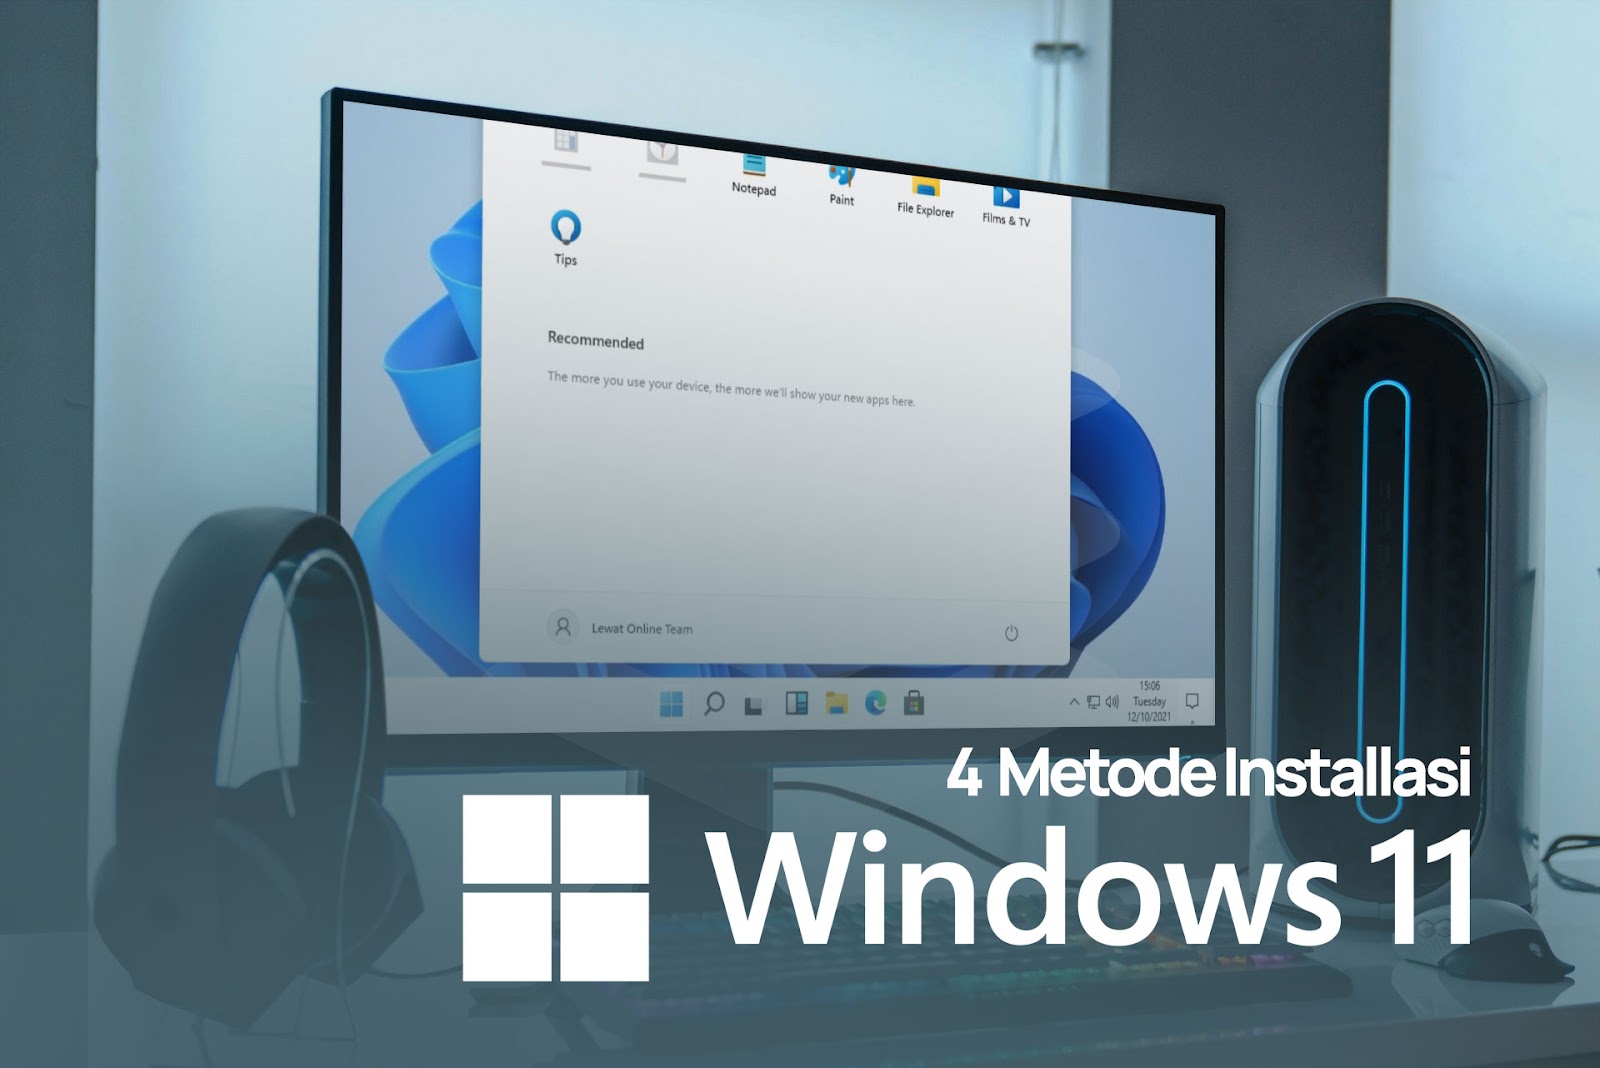 Cara Upgrade Windows 10 ke Windows 11